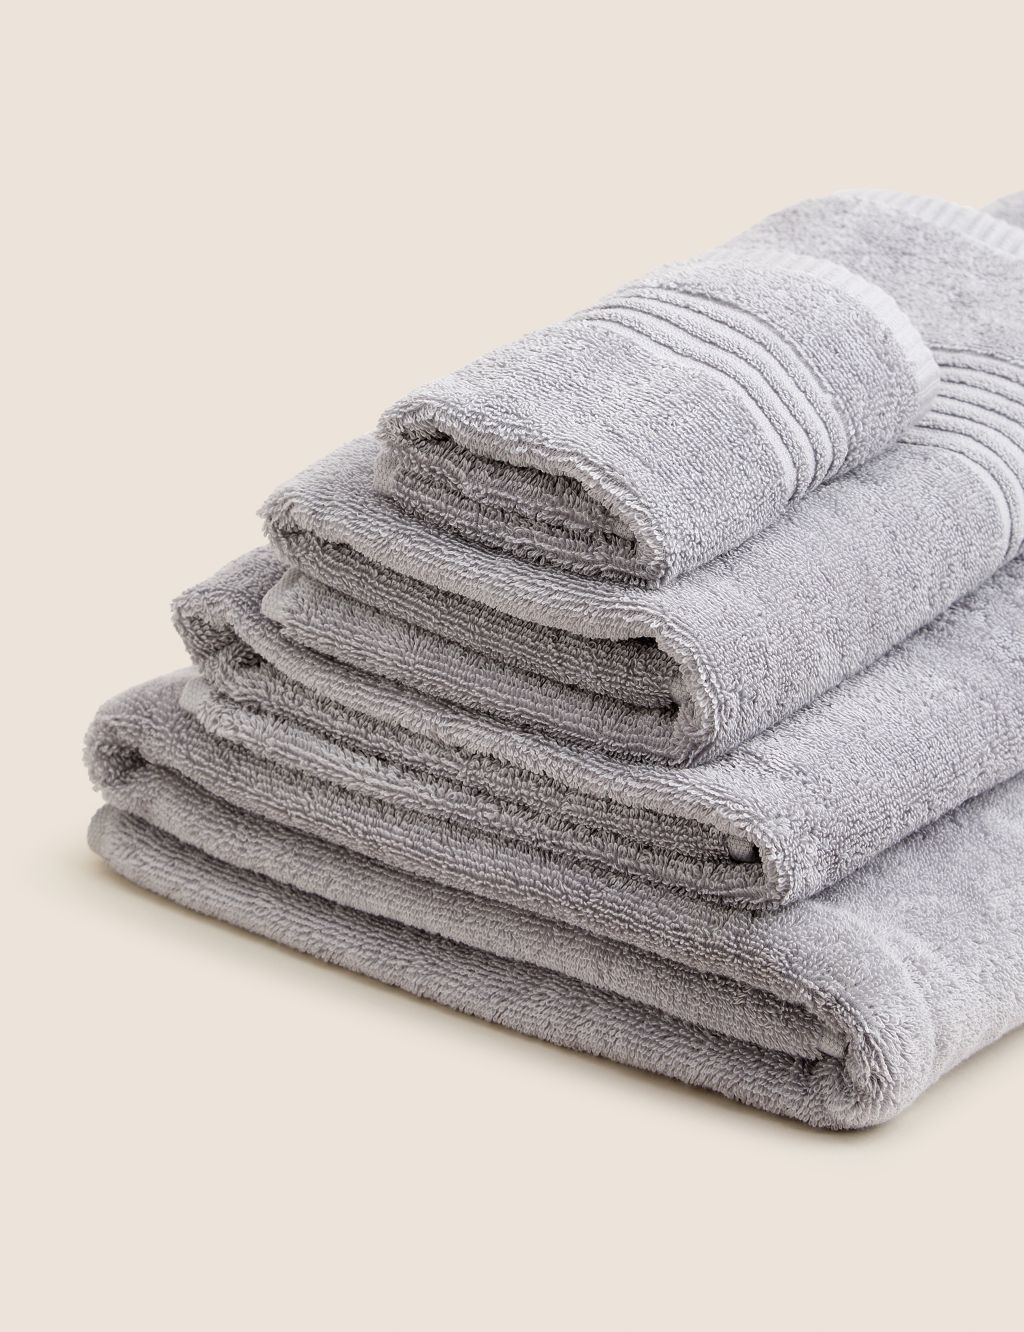 Everyday Egyptian Cotton Towel image 2